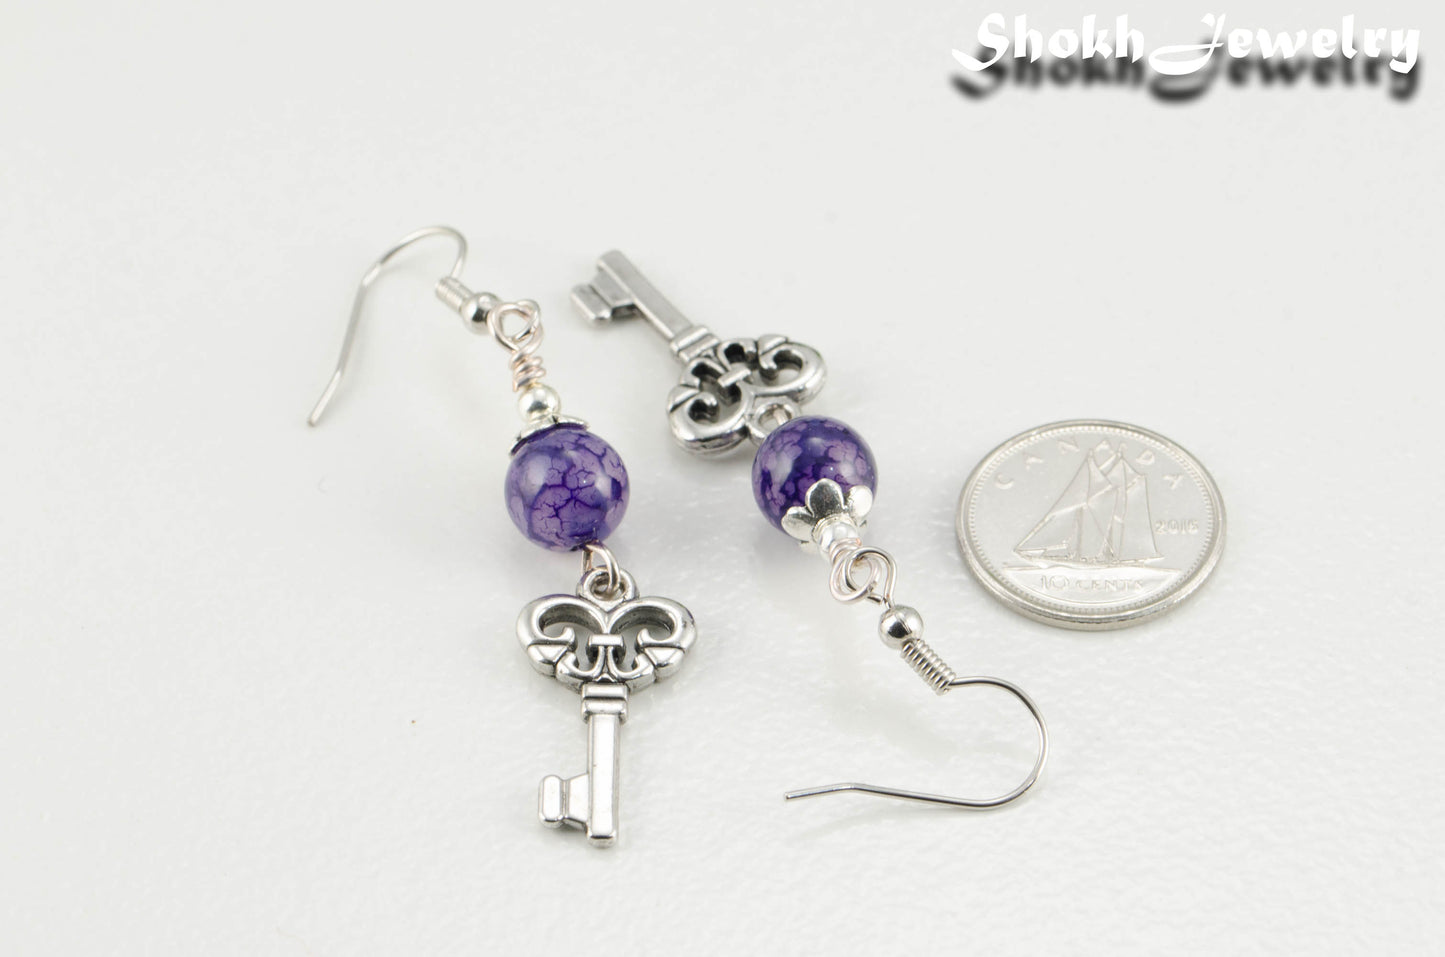 Purple Agate and Key Charm Dangle Earrings beside a dime.